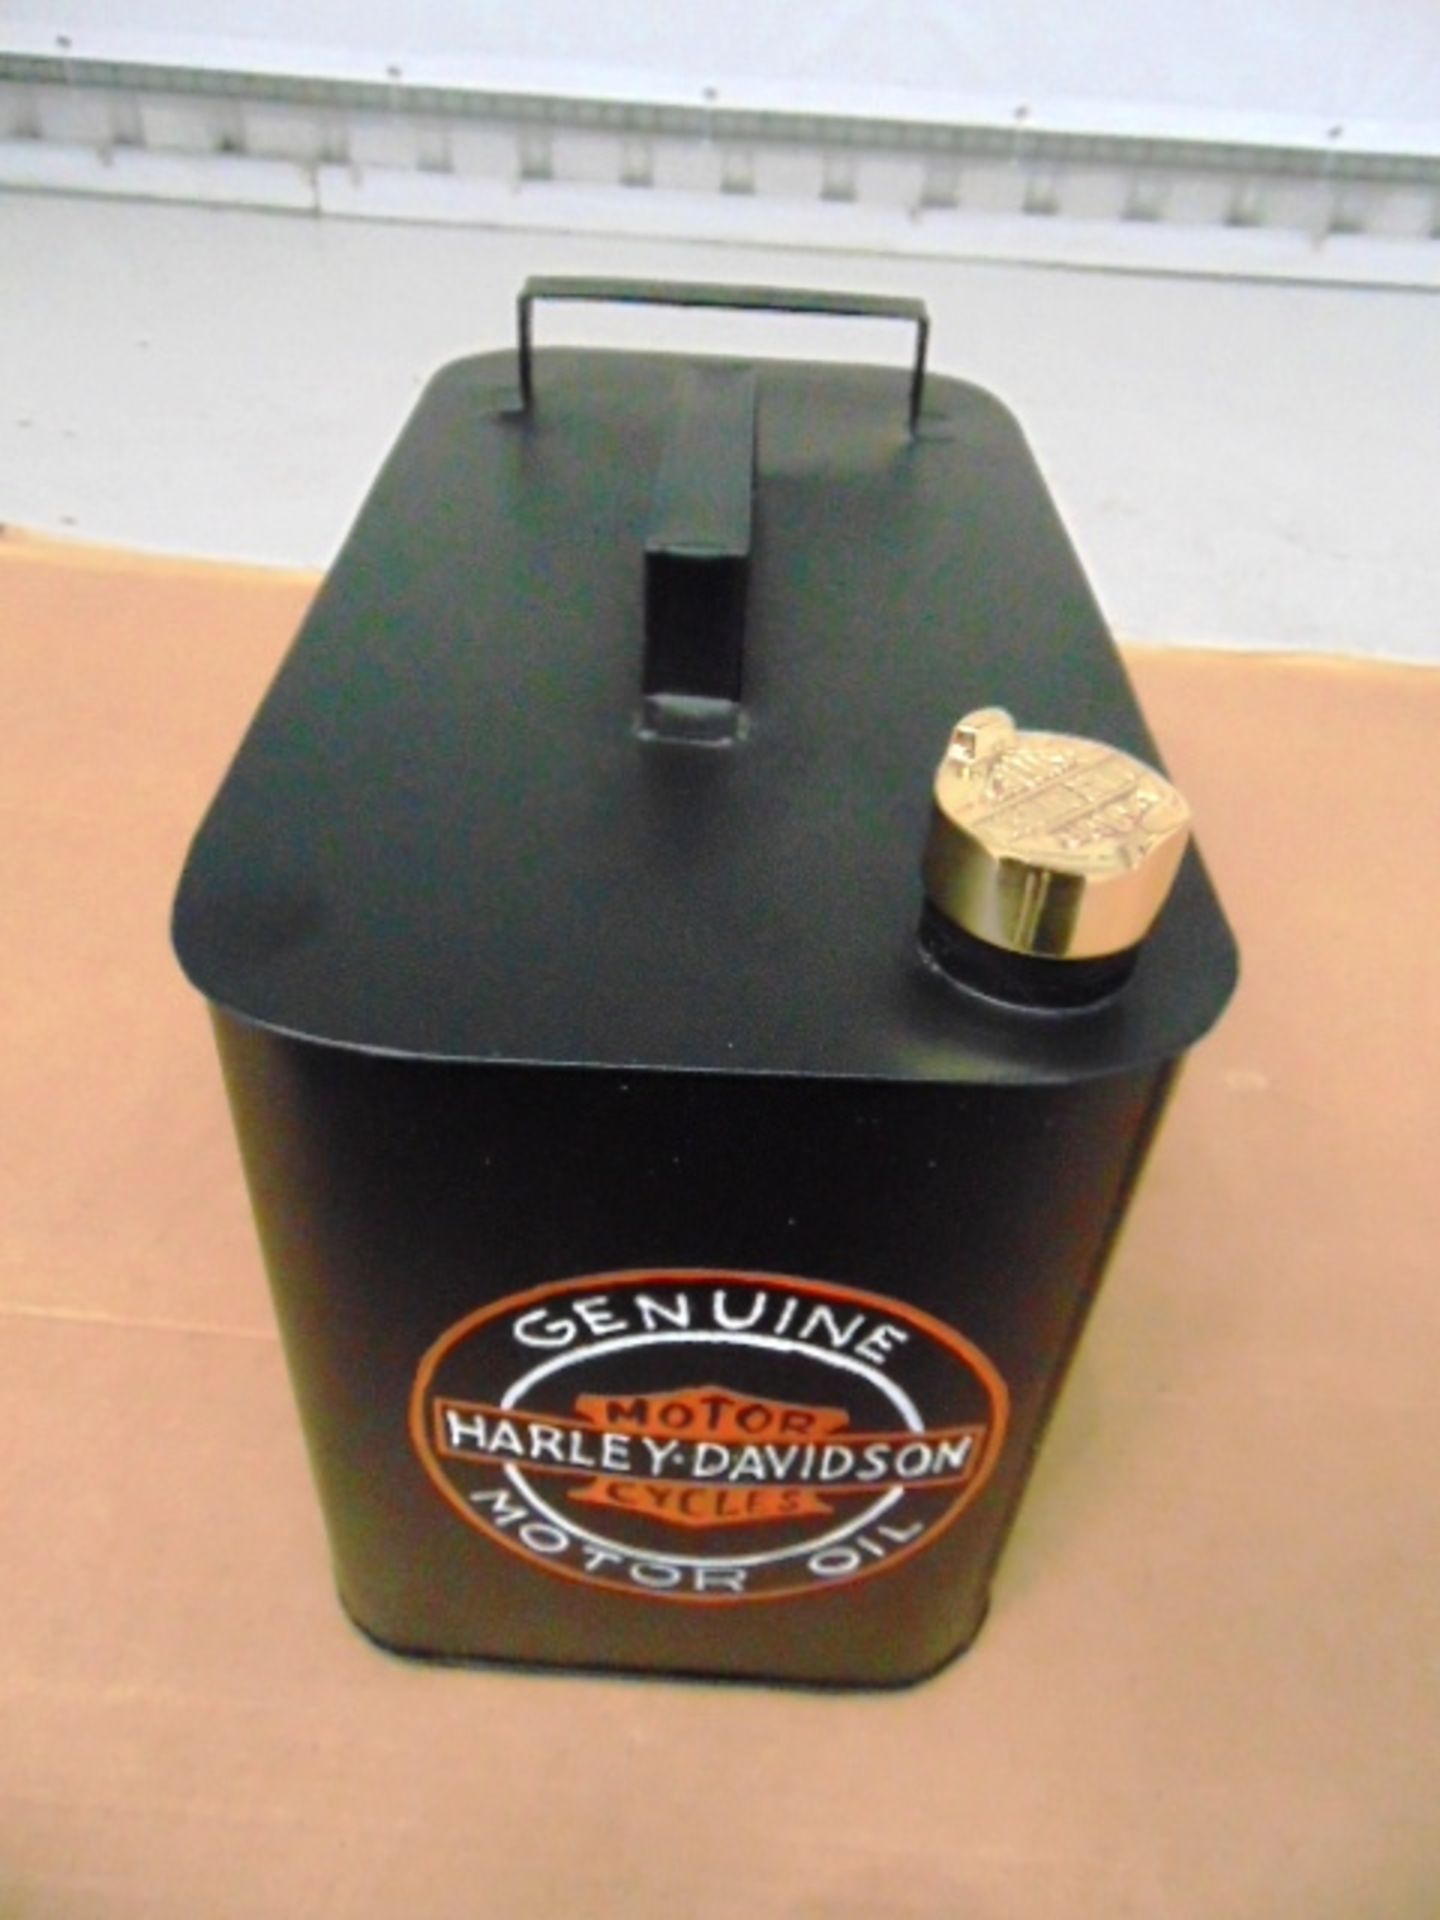 Harley Davidson Branded Oil Can - Image 3 of 5